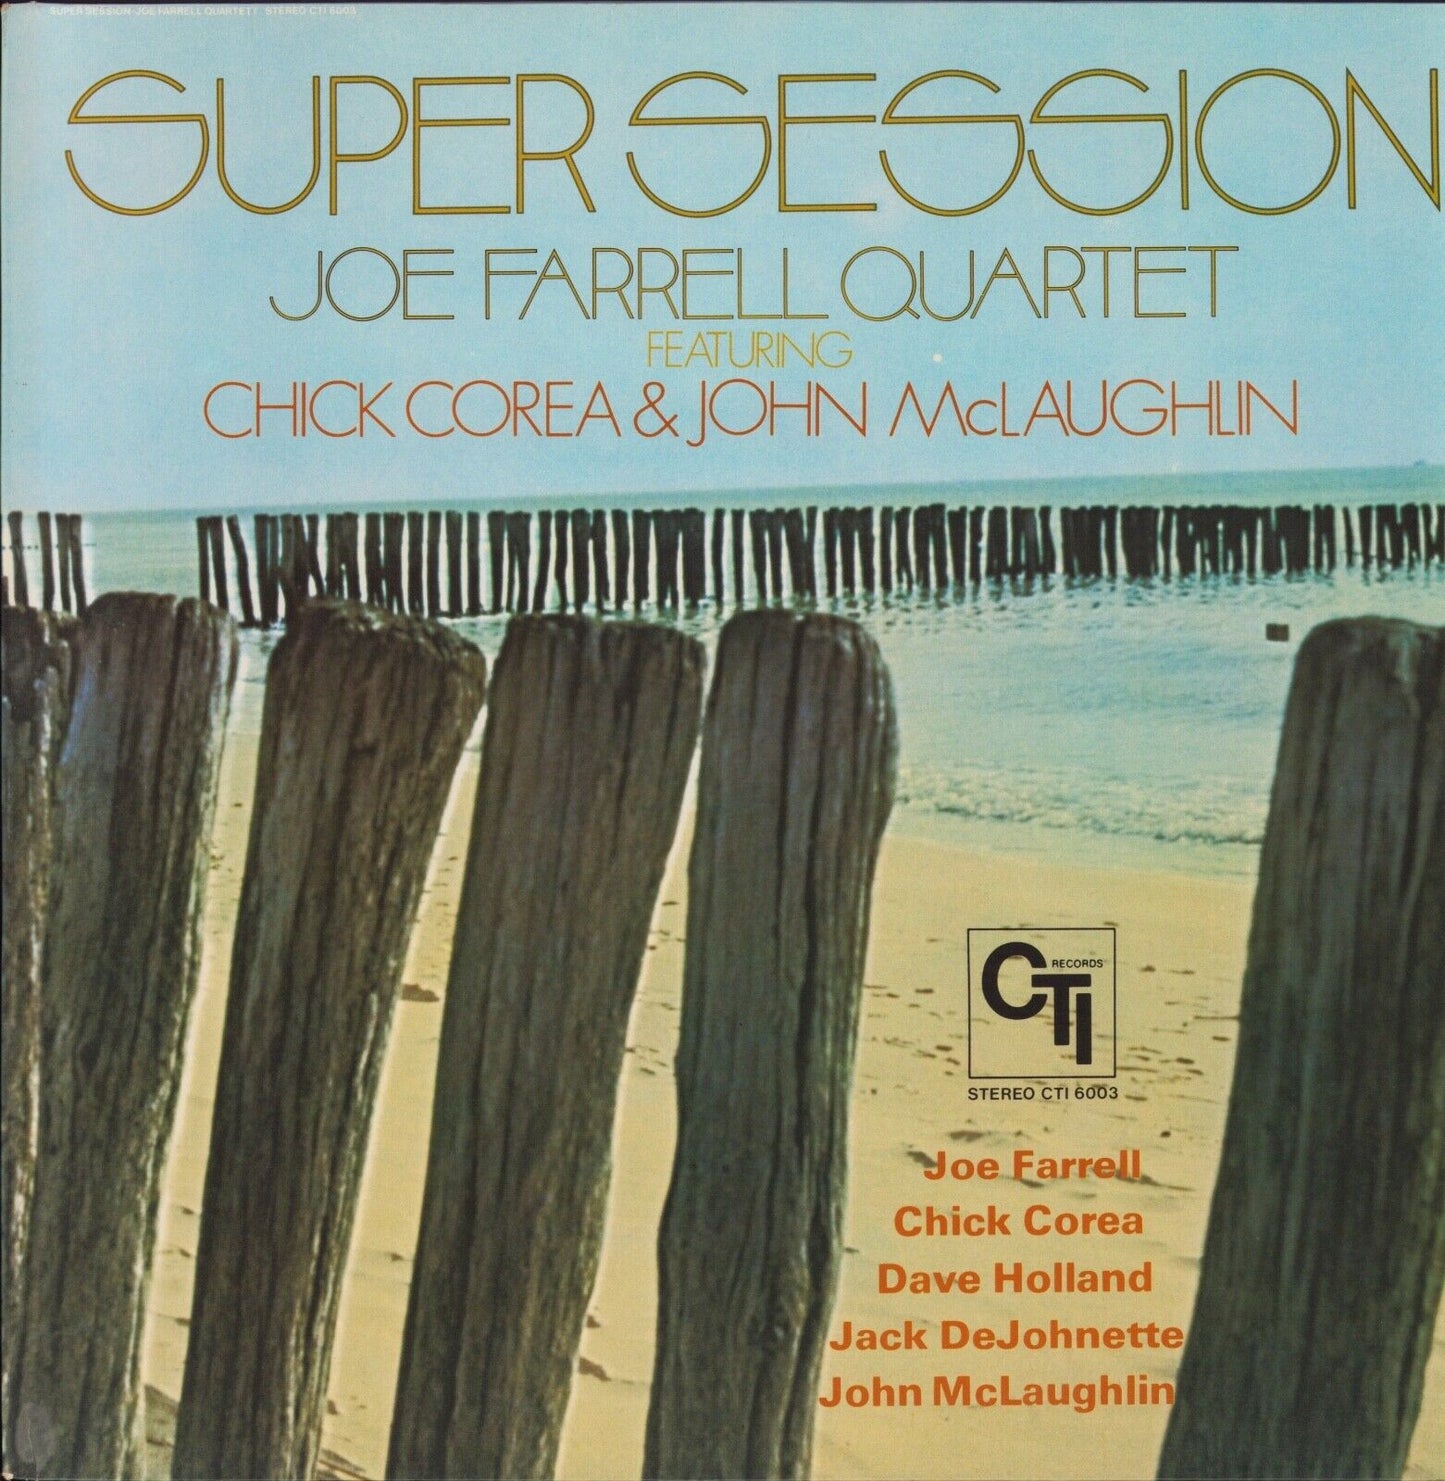 Joe Farrell Quartet Featuring Chick Corea & John McLaughlin ‎- Super Session Vinyl LP